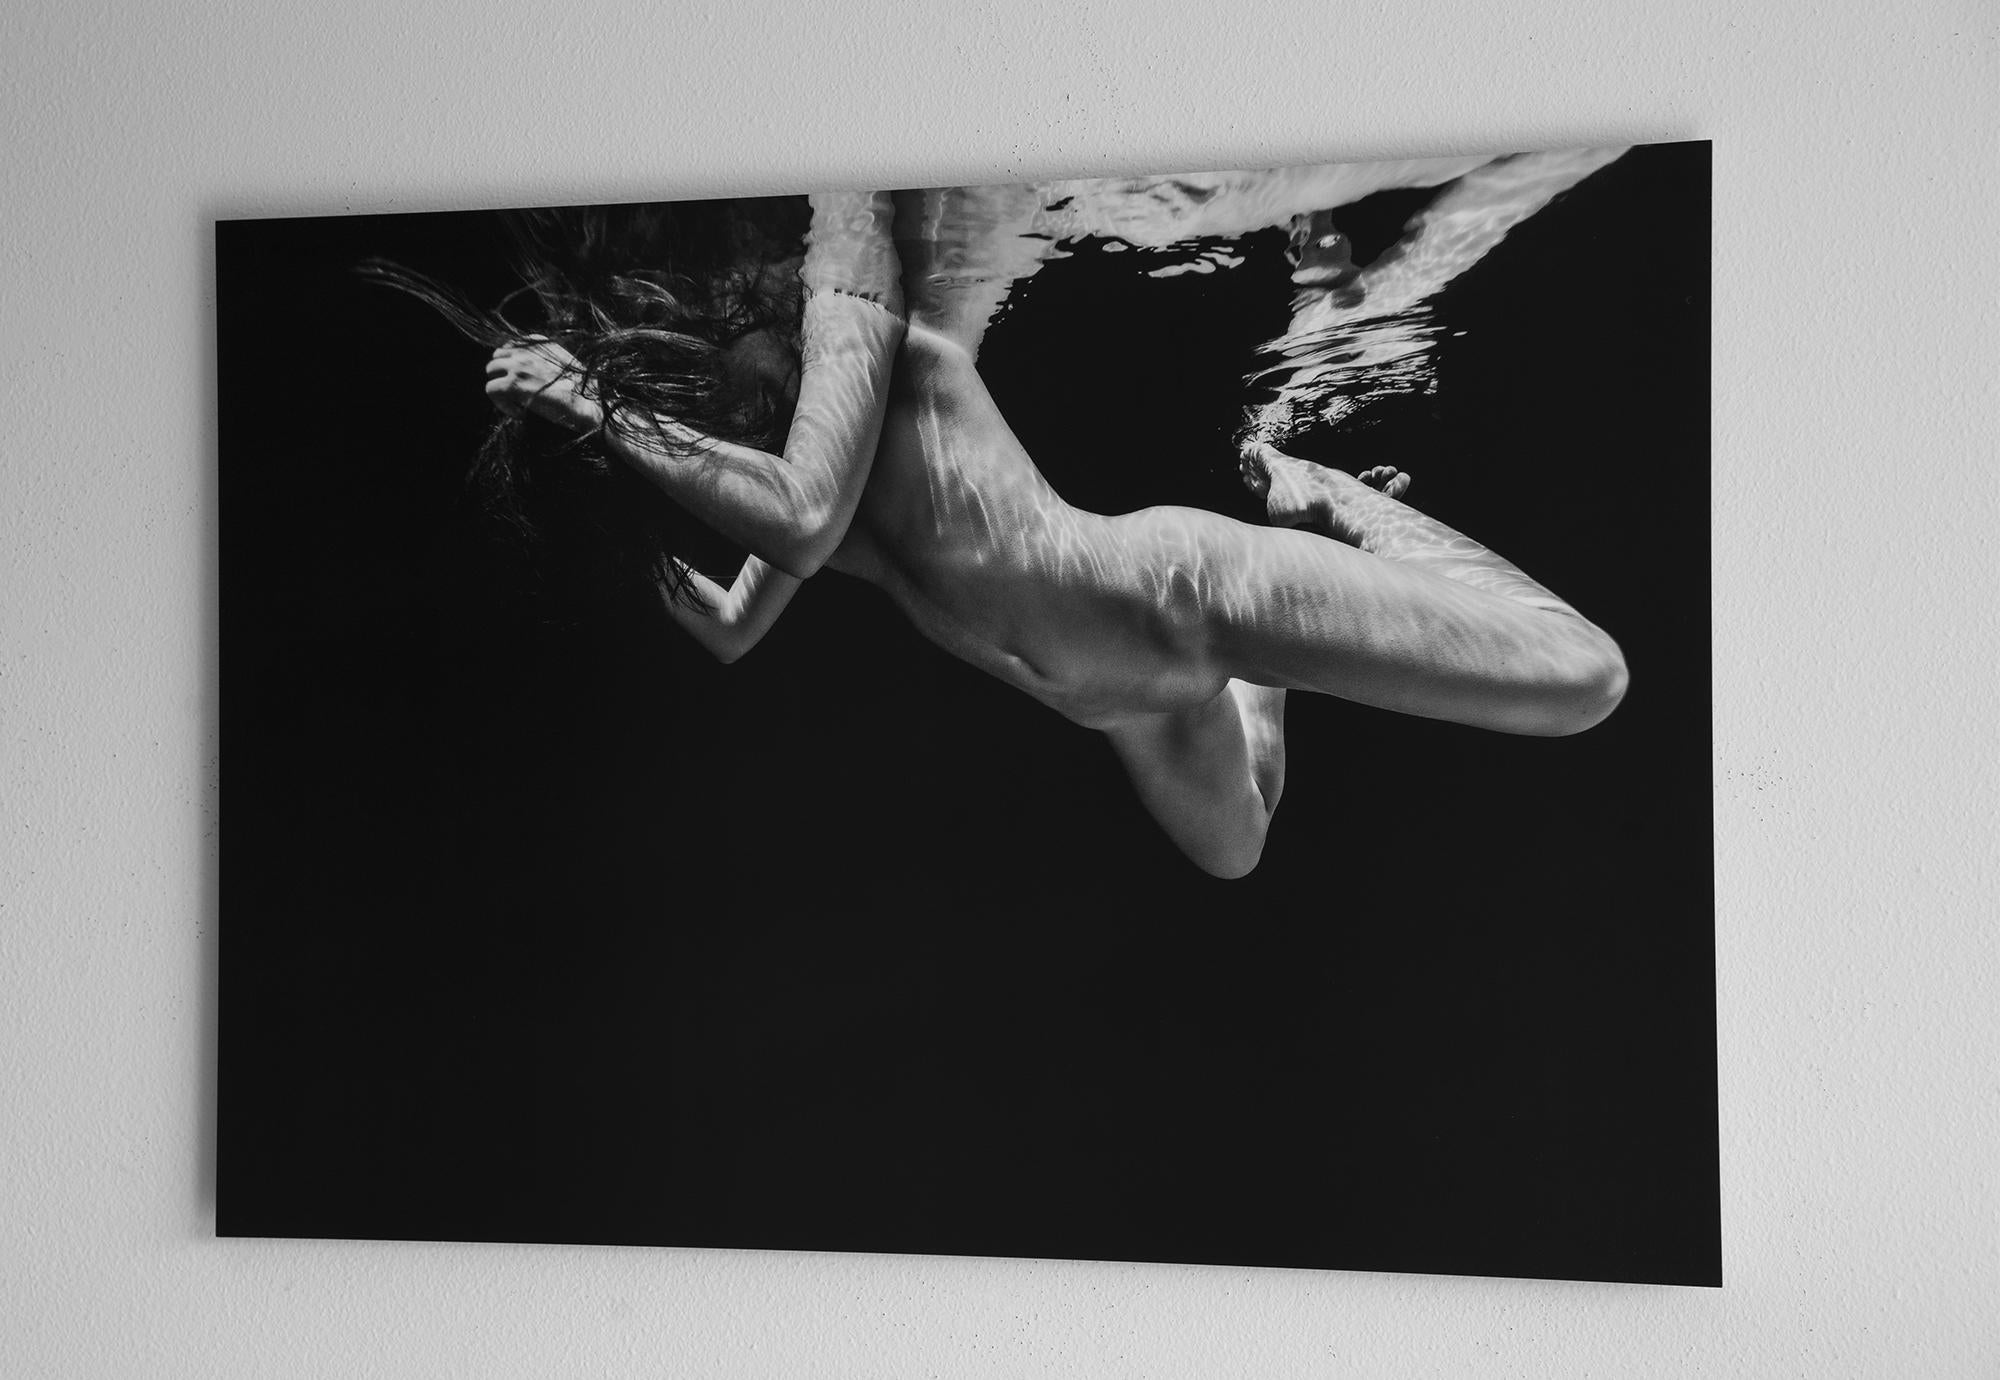 The Smile - underwater black & white nude photograph - aluminum 24